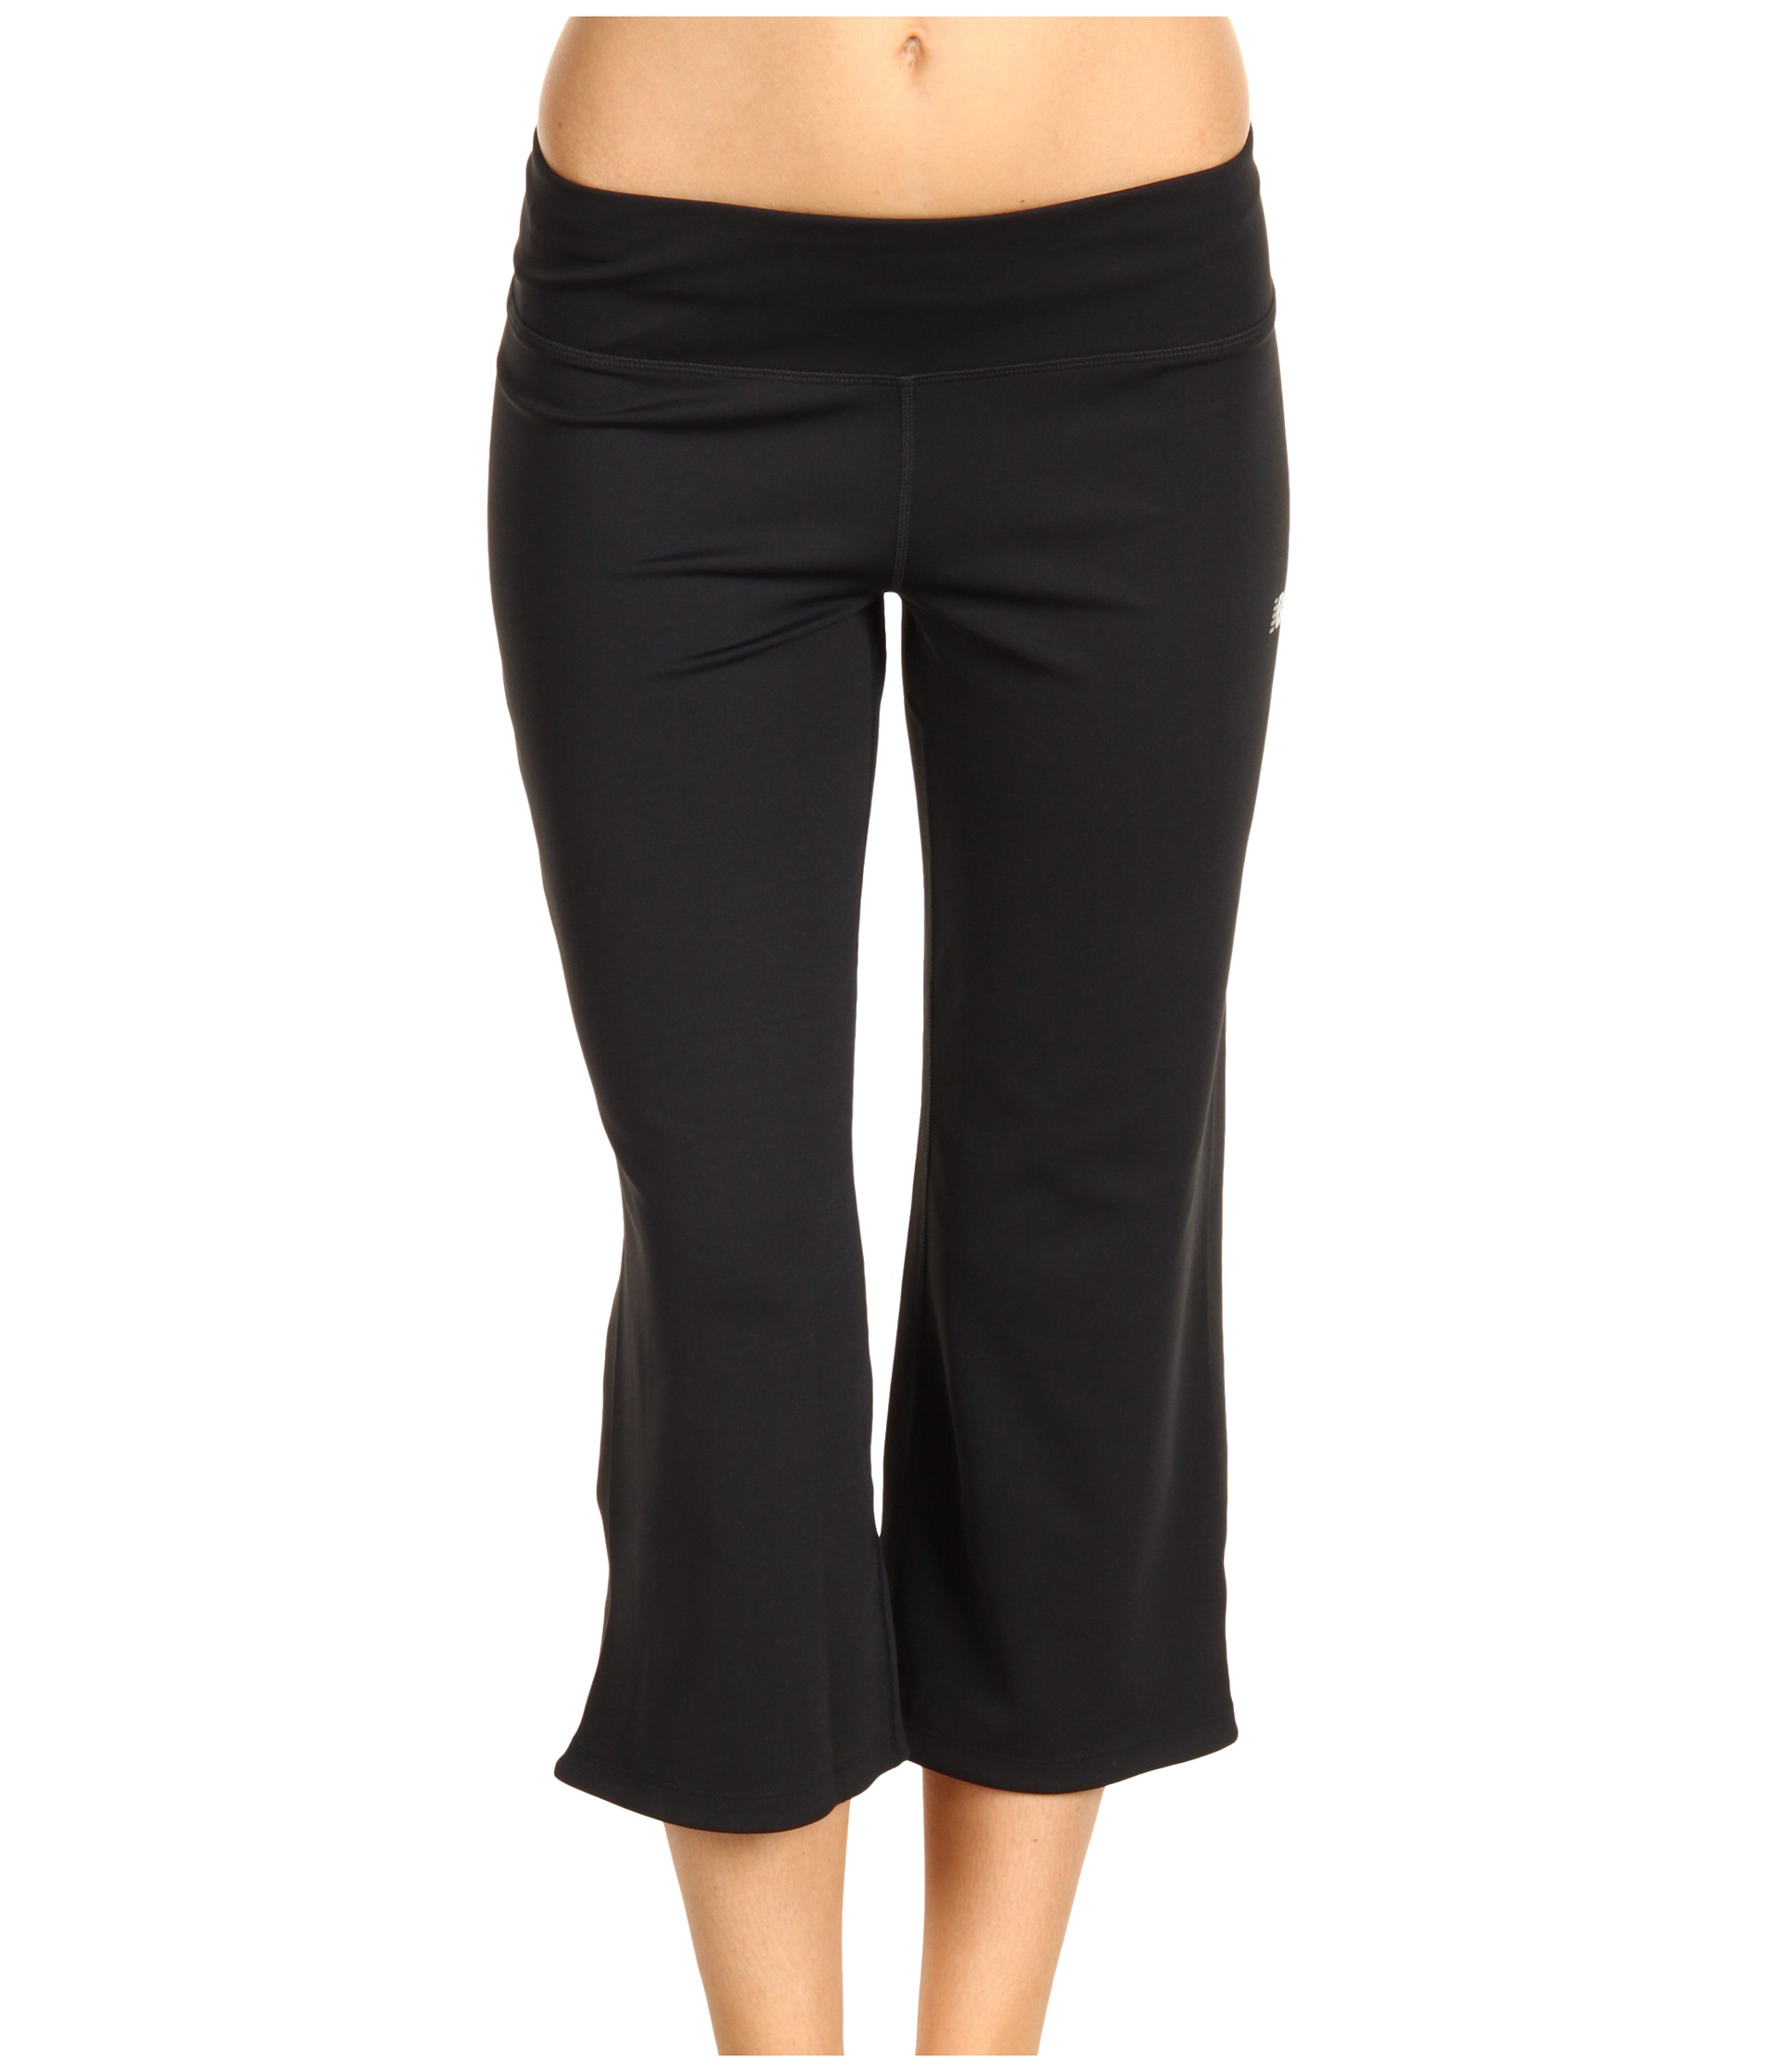 Calvin Klein Plus Size Slim Pant $79.50 NEW New Balance Fitness Capri 